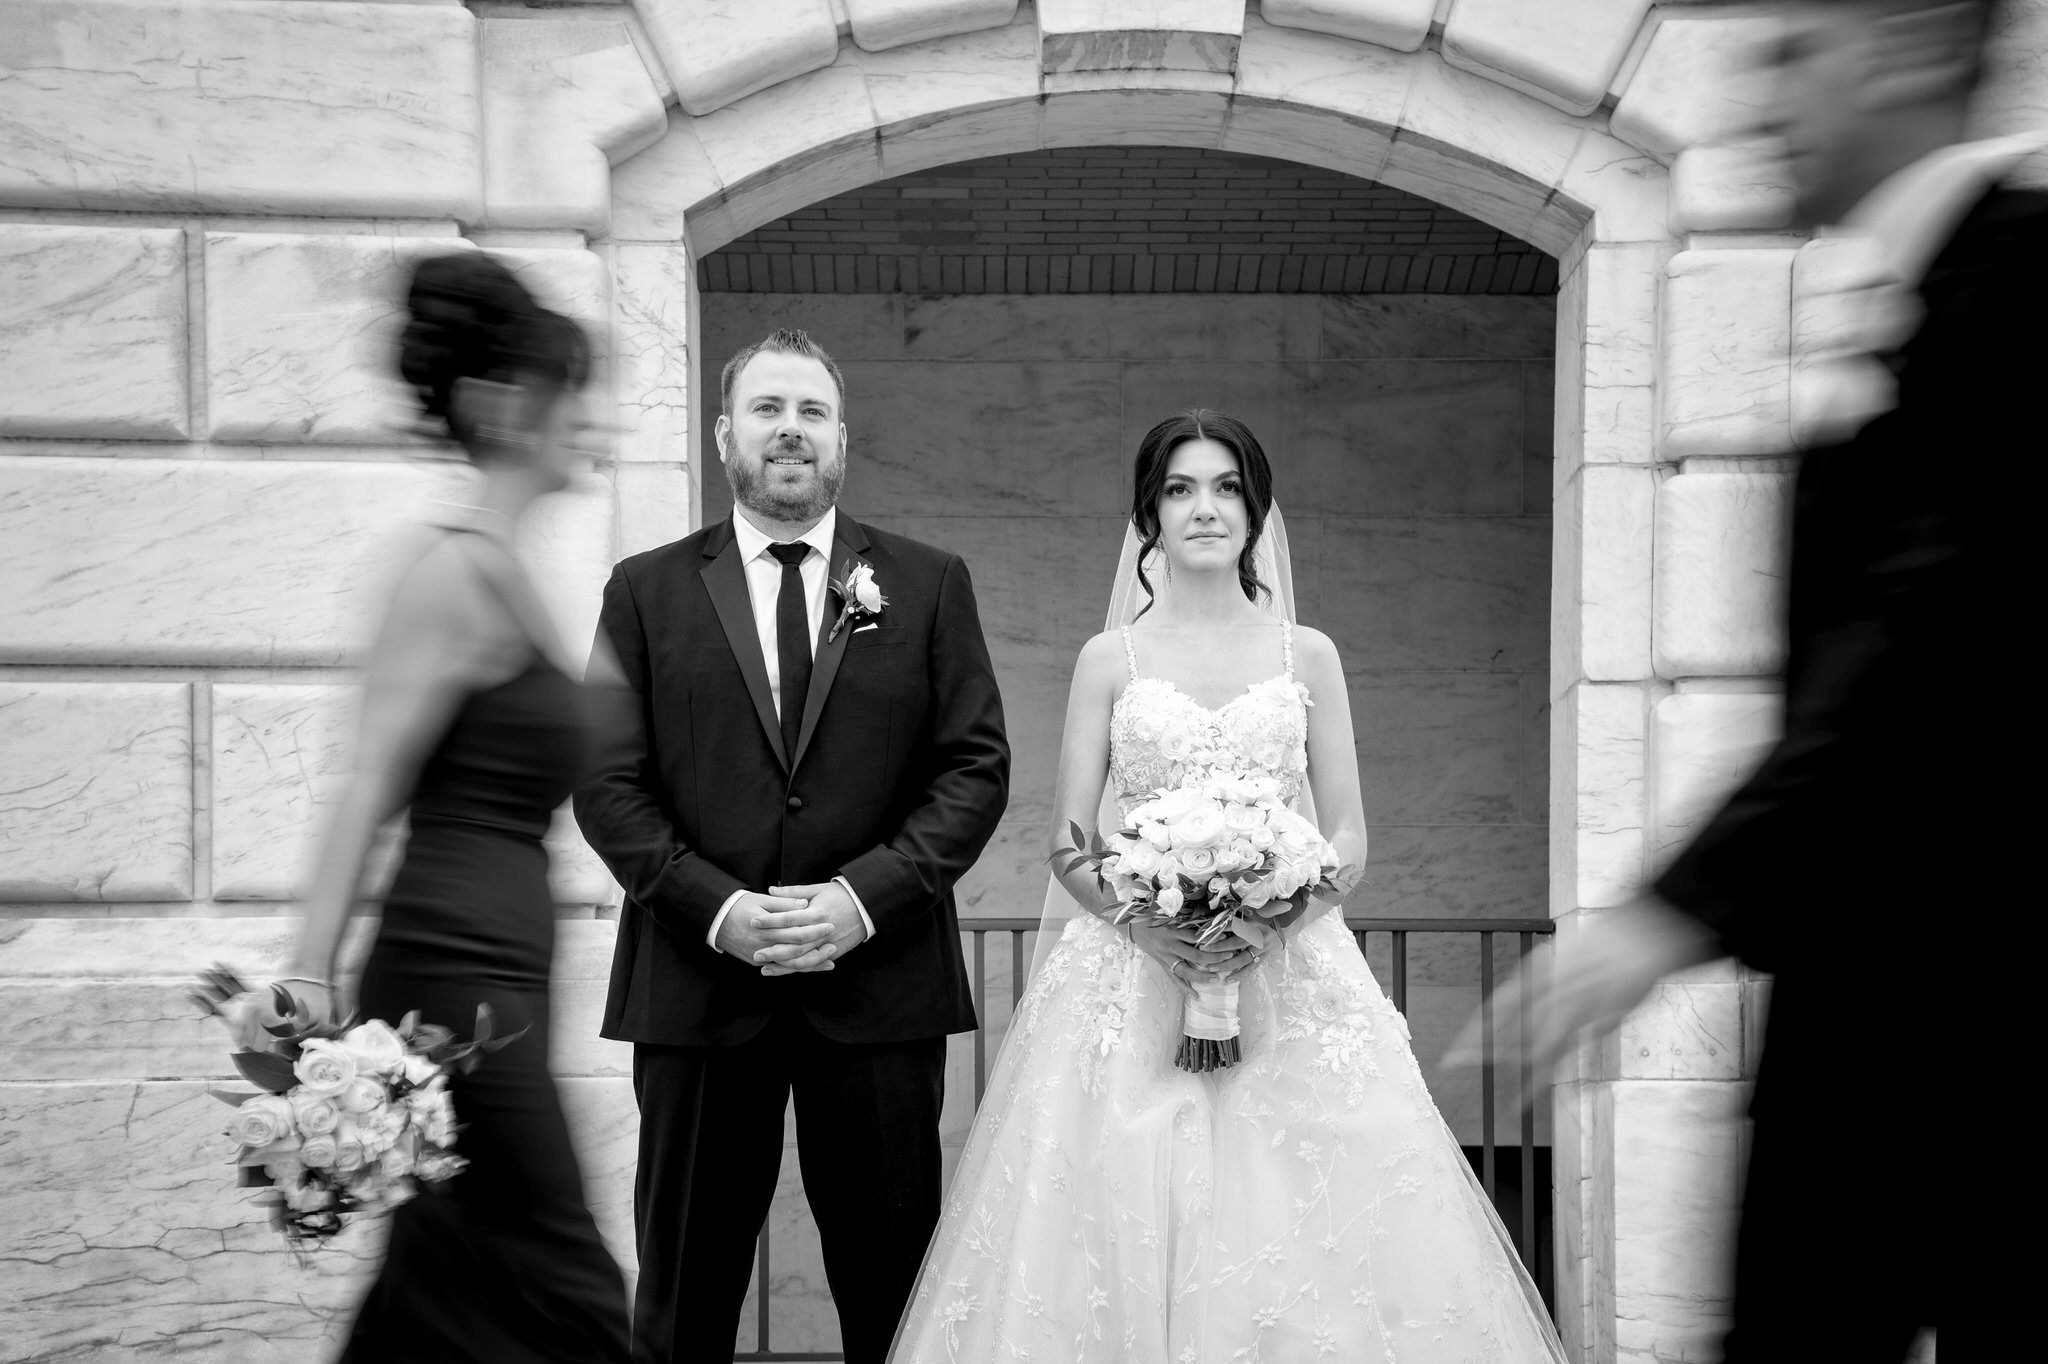 Blurry wedding photo at the DIA.  